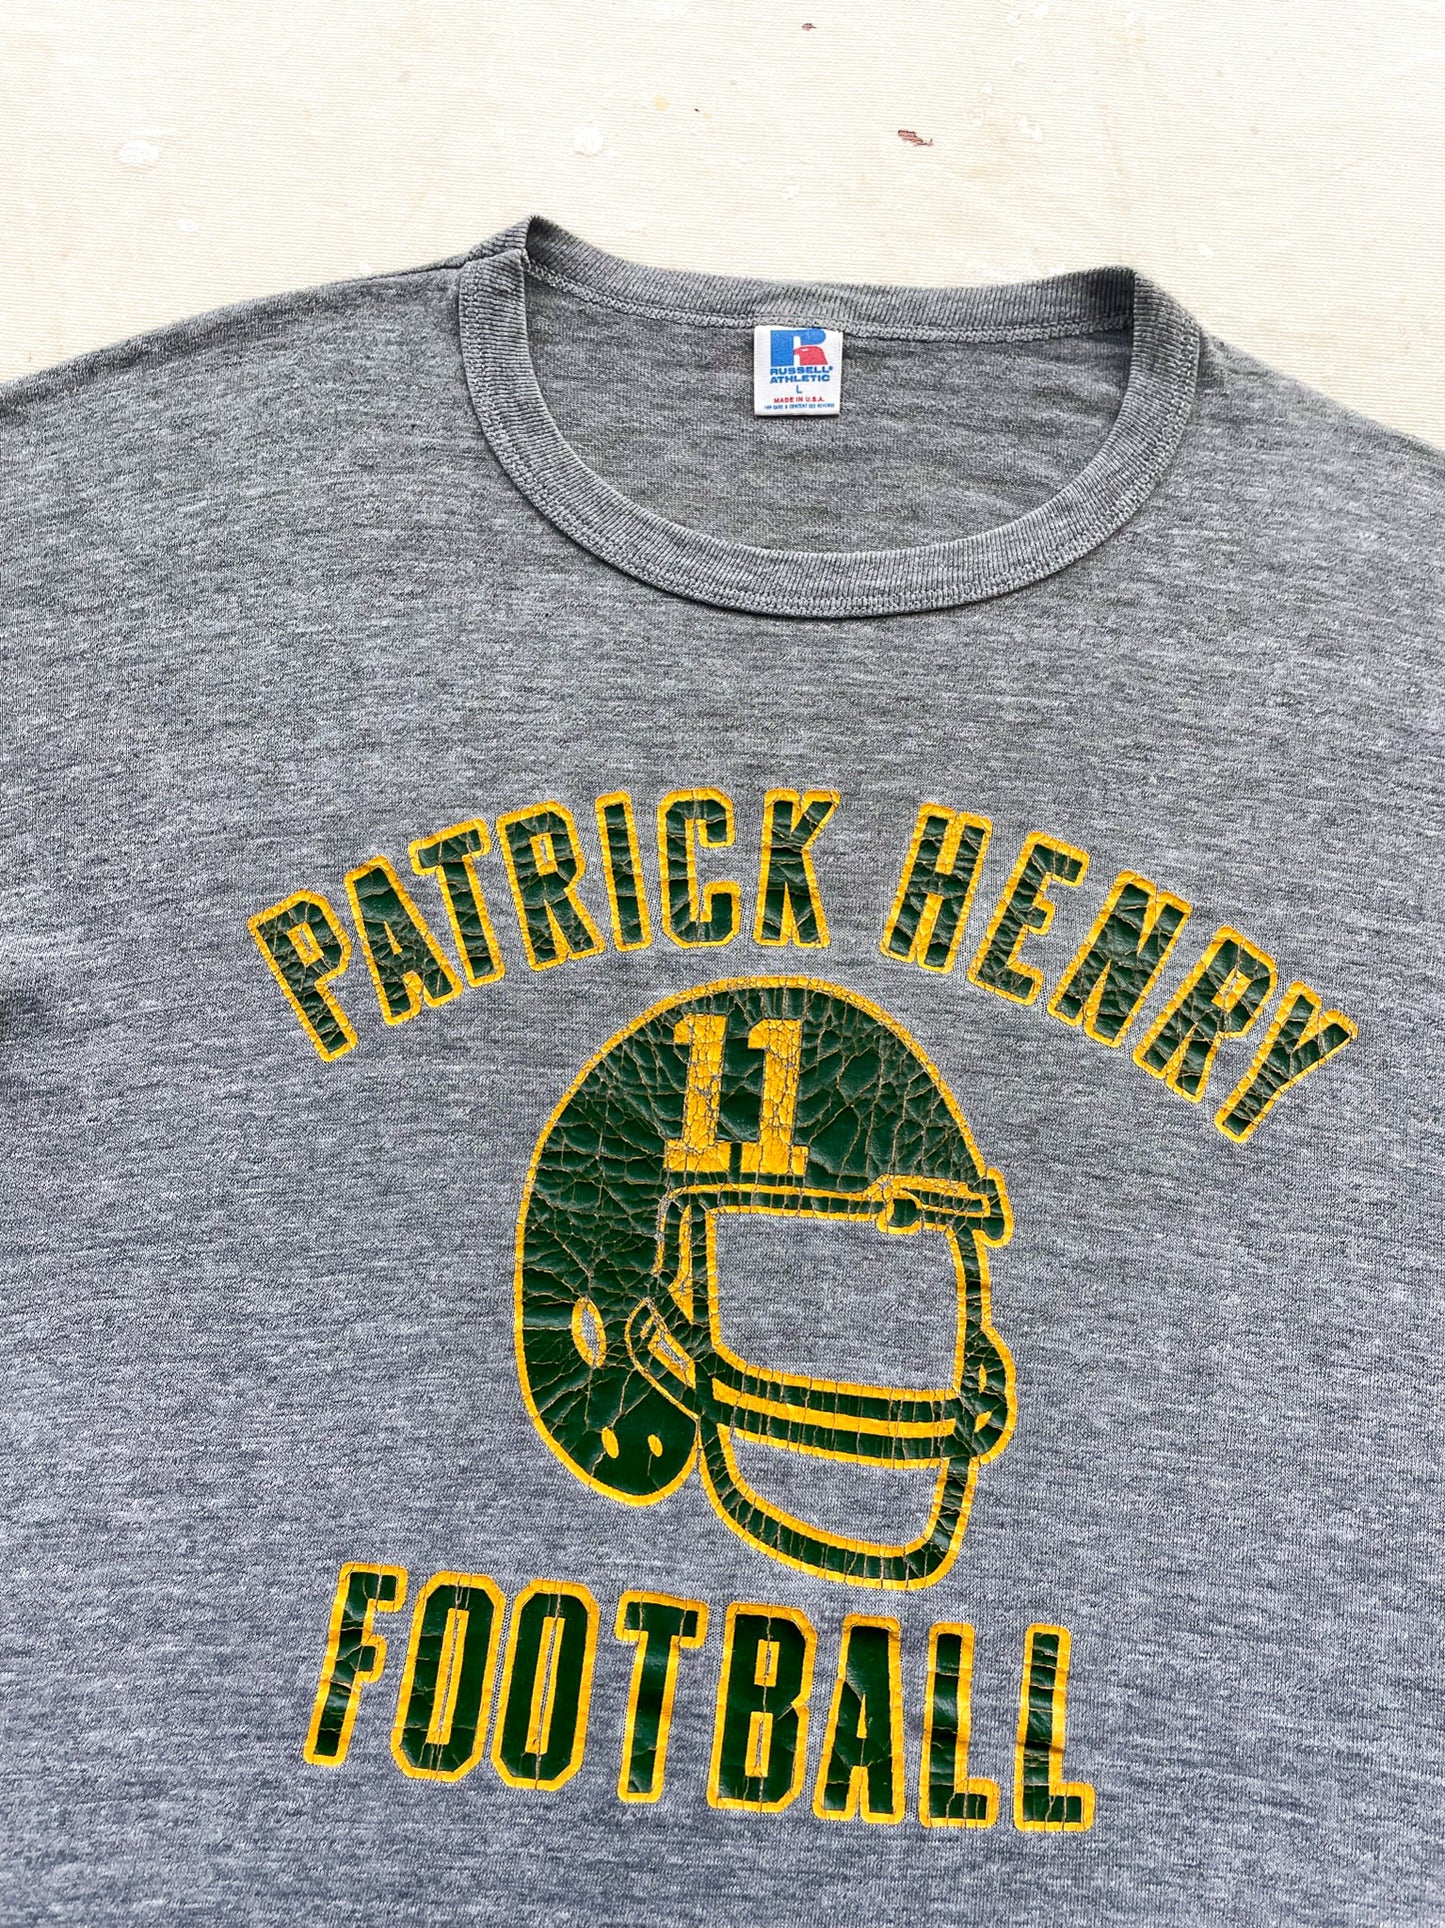 90's Patrick Henry Football T-Shirt—[L]